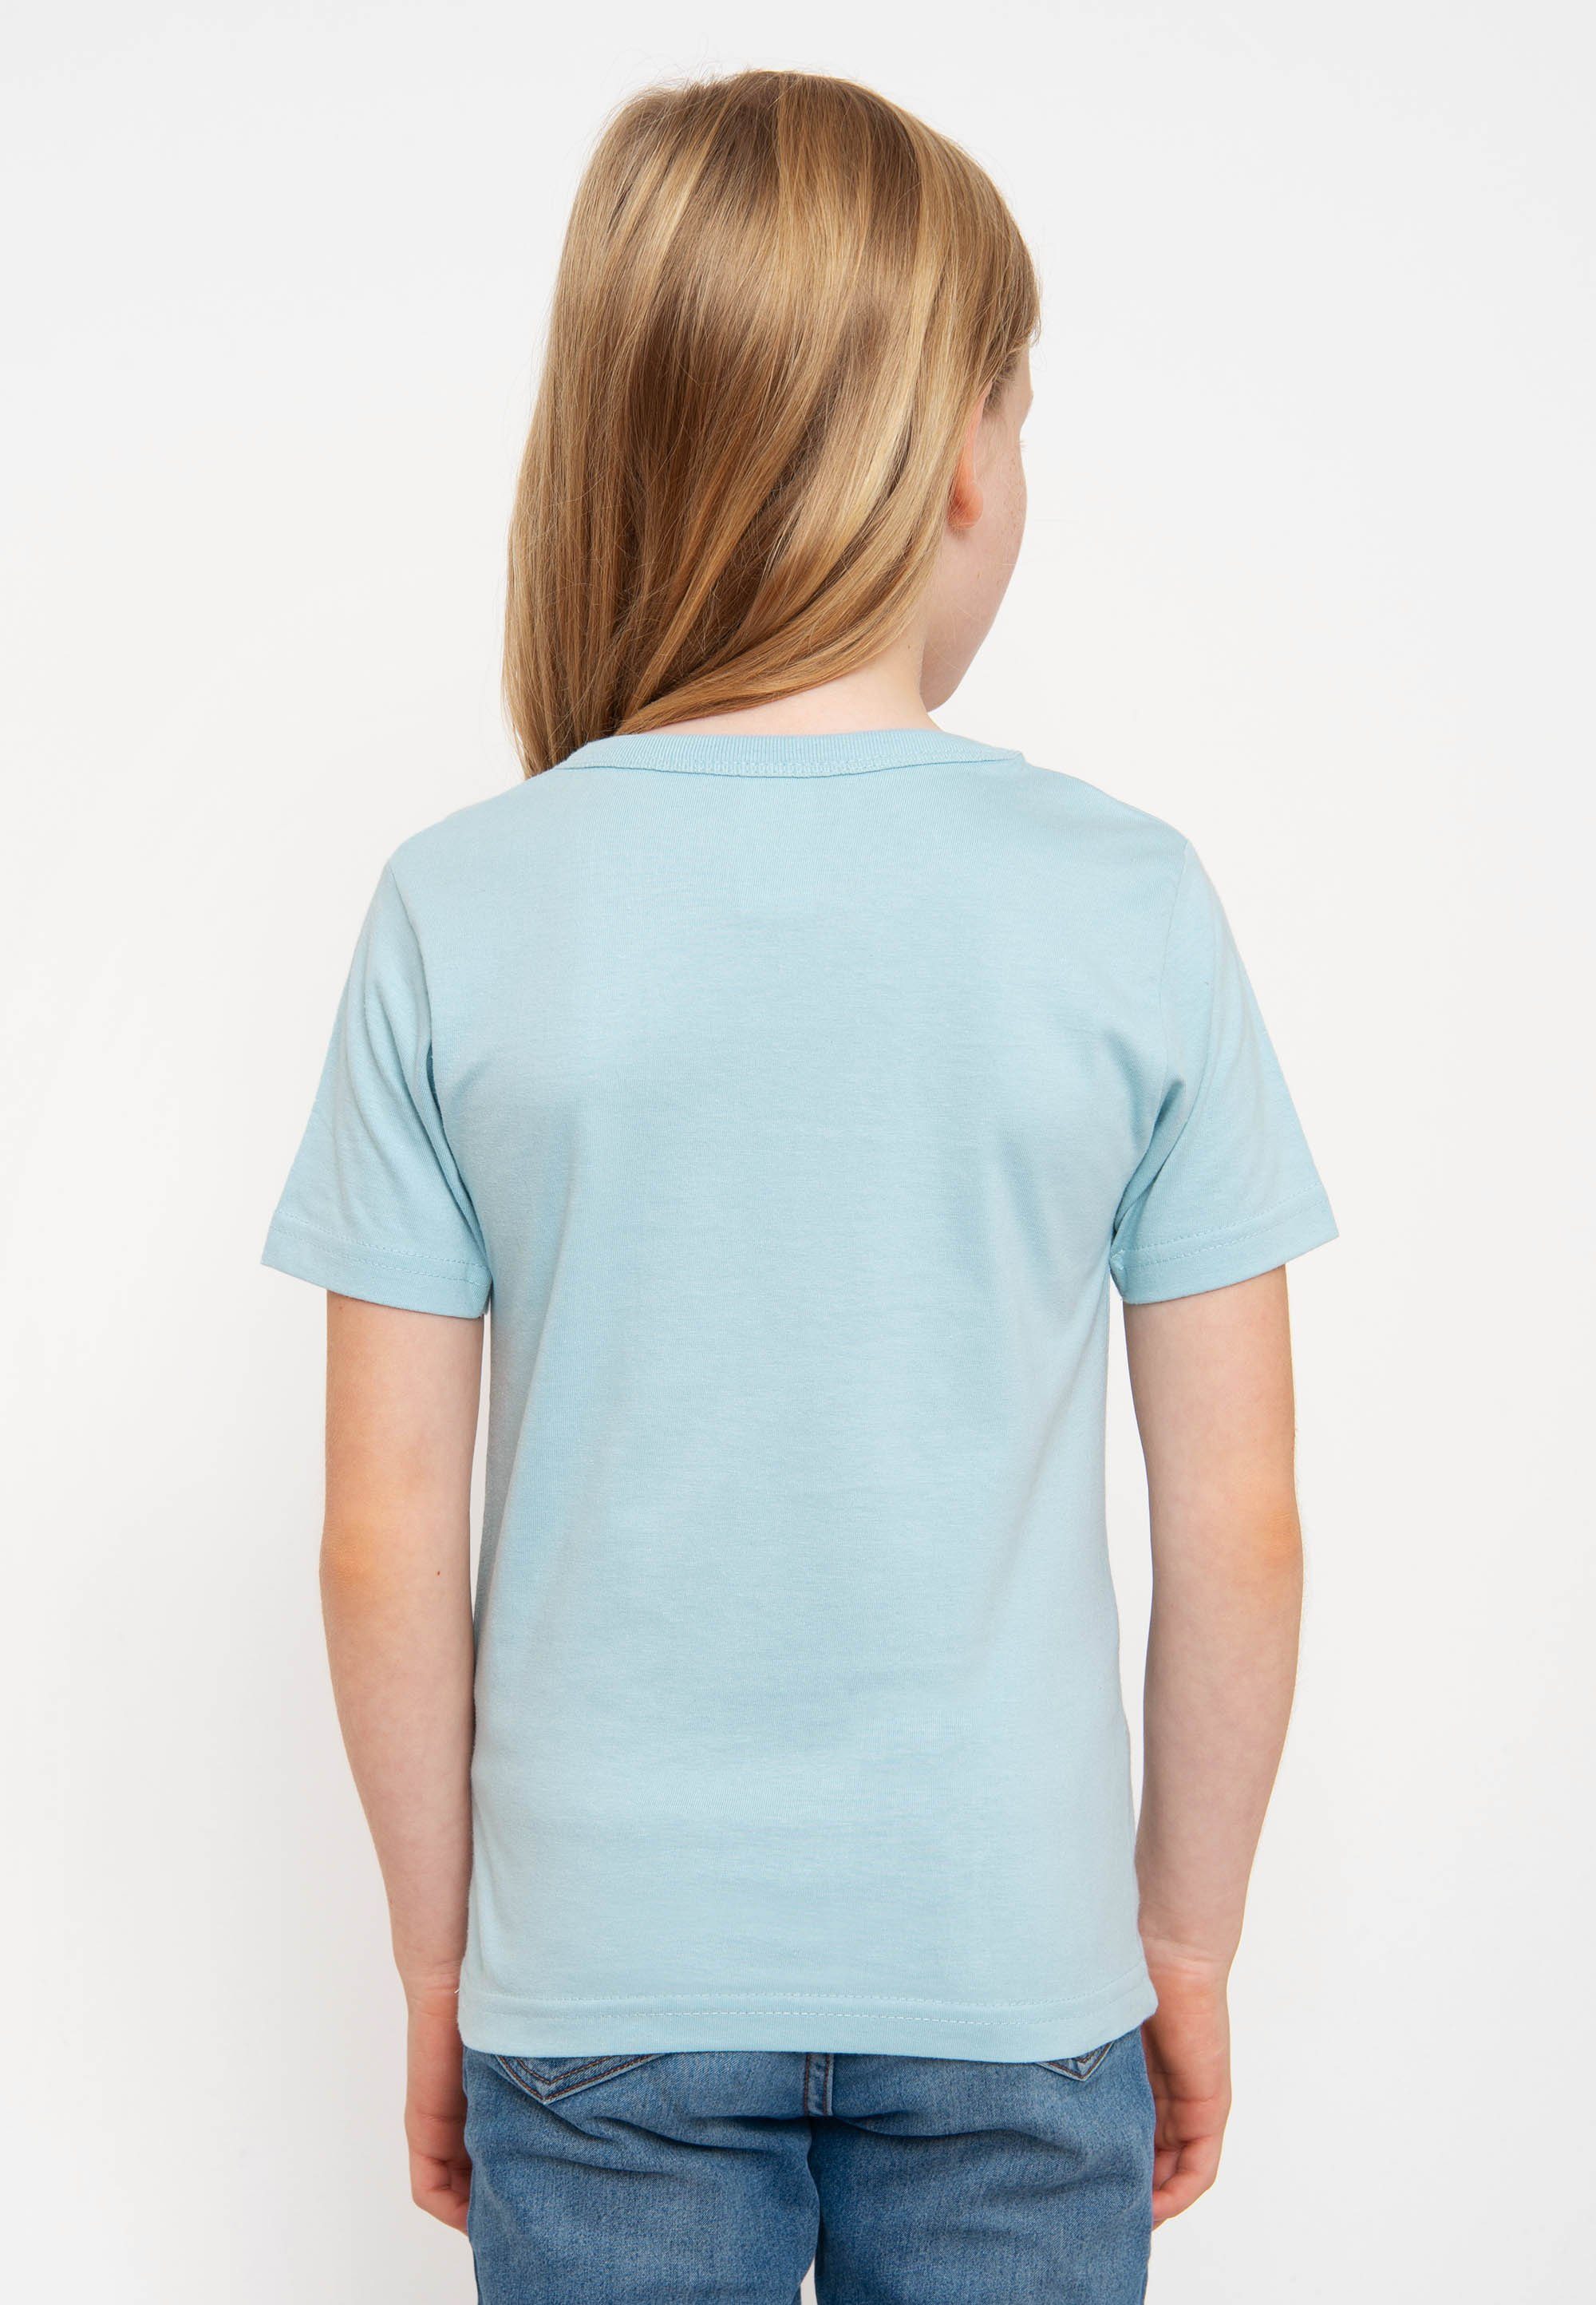 LOGOSHIRT T-Shirt Sesamstraße - Krümelmonster hellblau Frontprint mit coolem